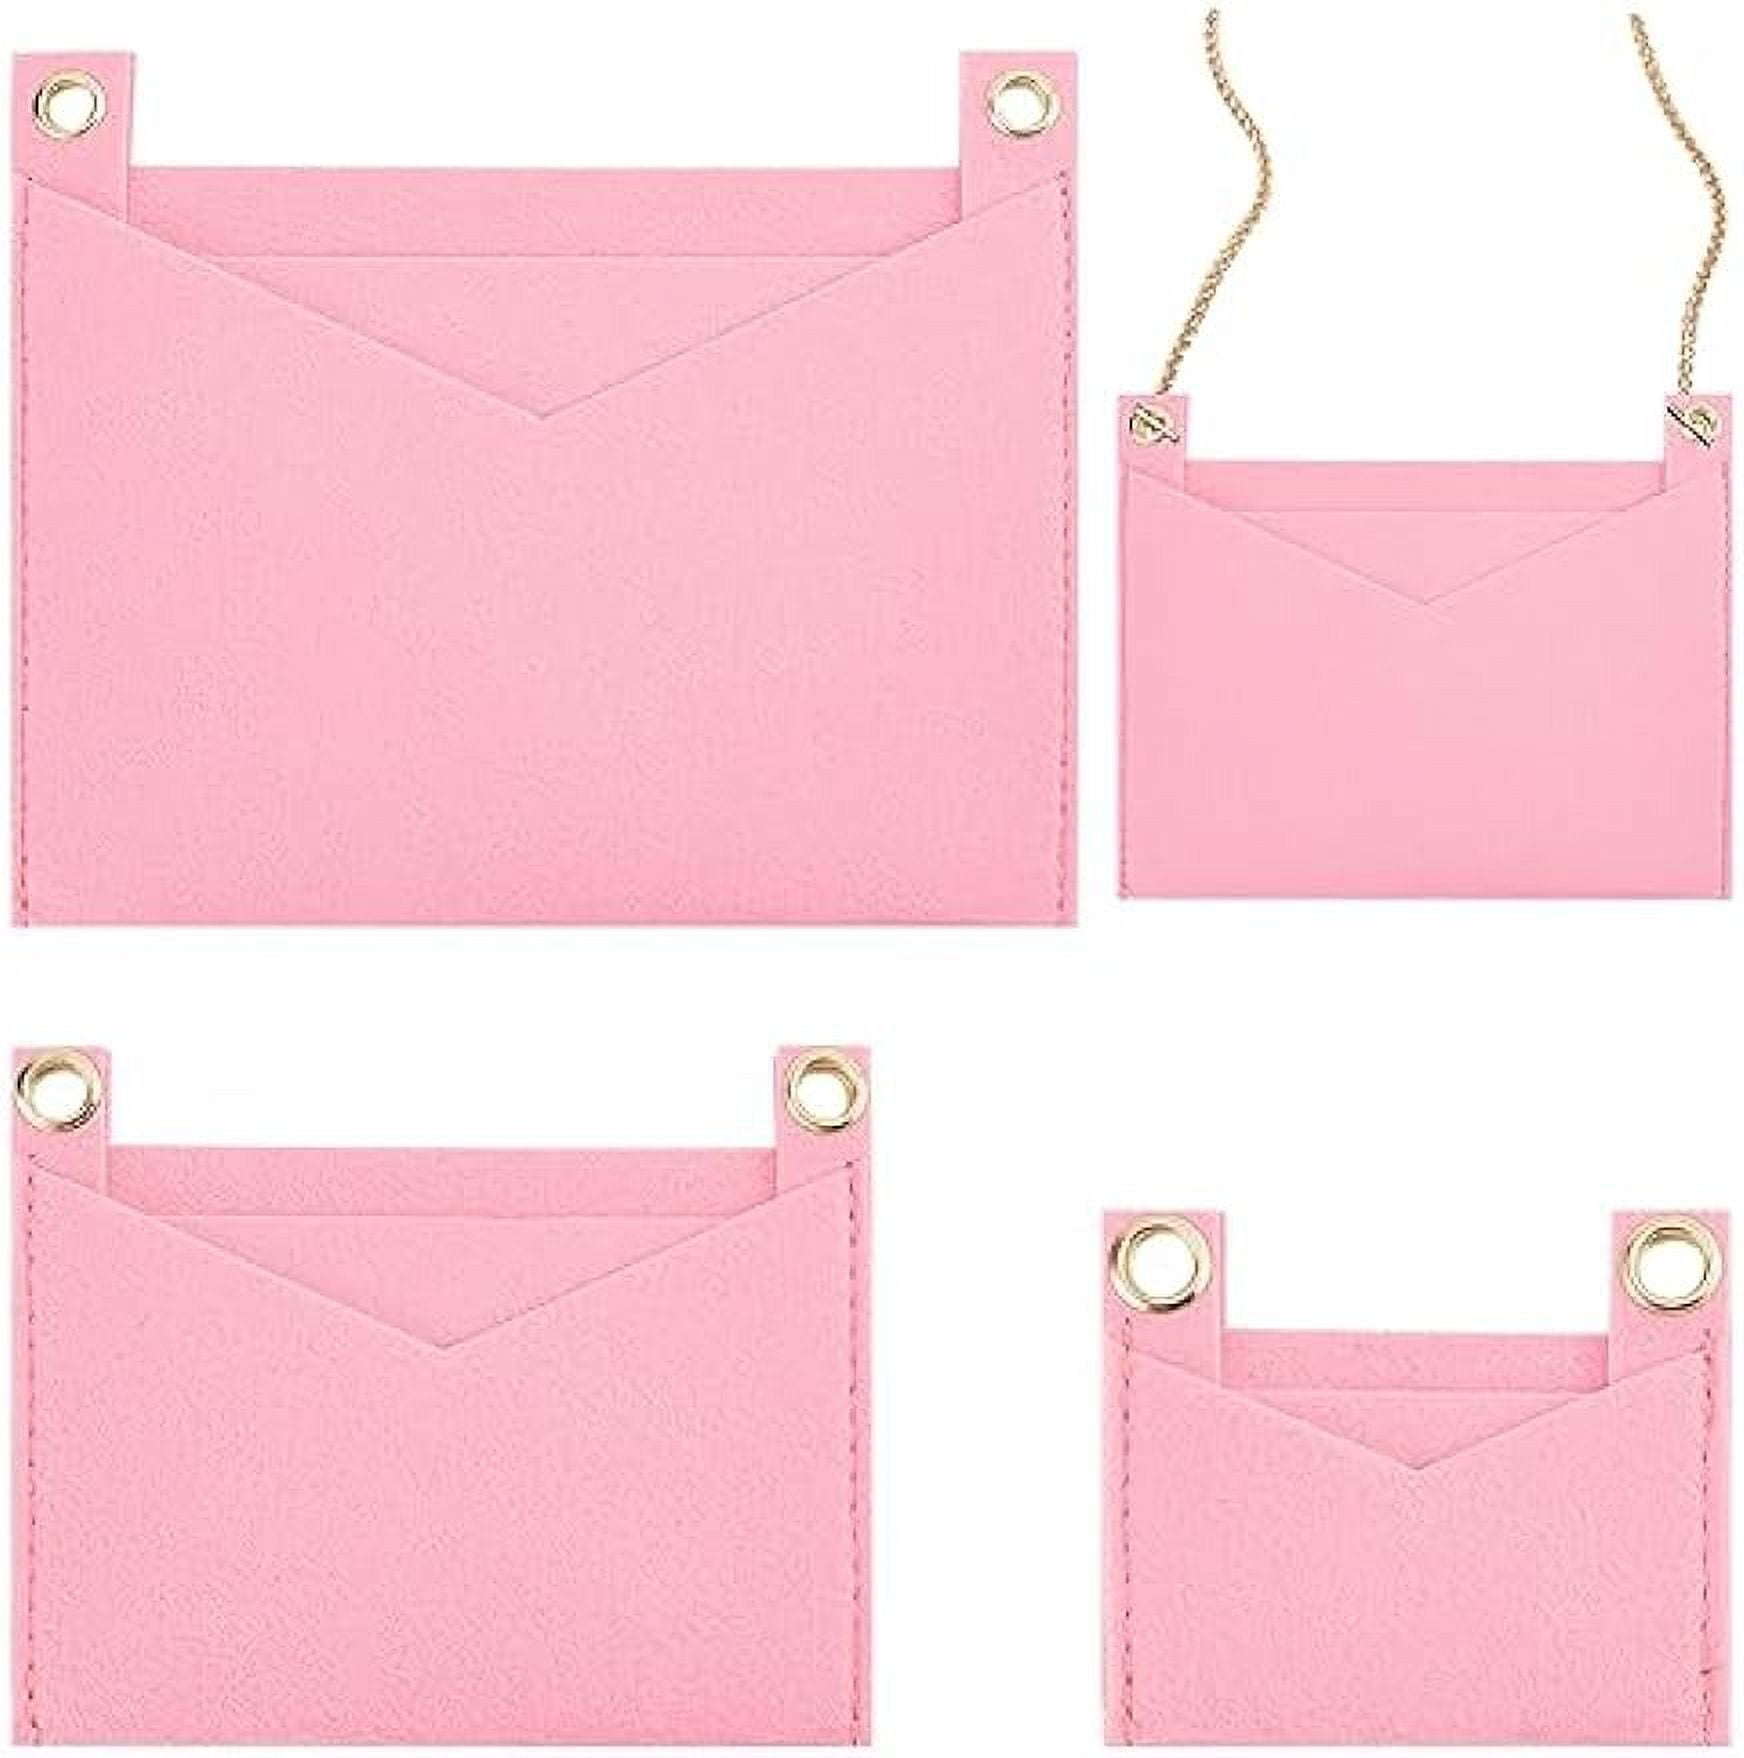 5 Colors Felt Purse Organizer Insert Handbag Organizer Inside Crossbody  Purse Conversion Kit Women Clutch Envelope Bag Insert Liner for LV Kirigami